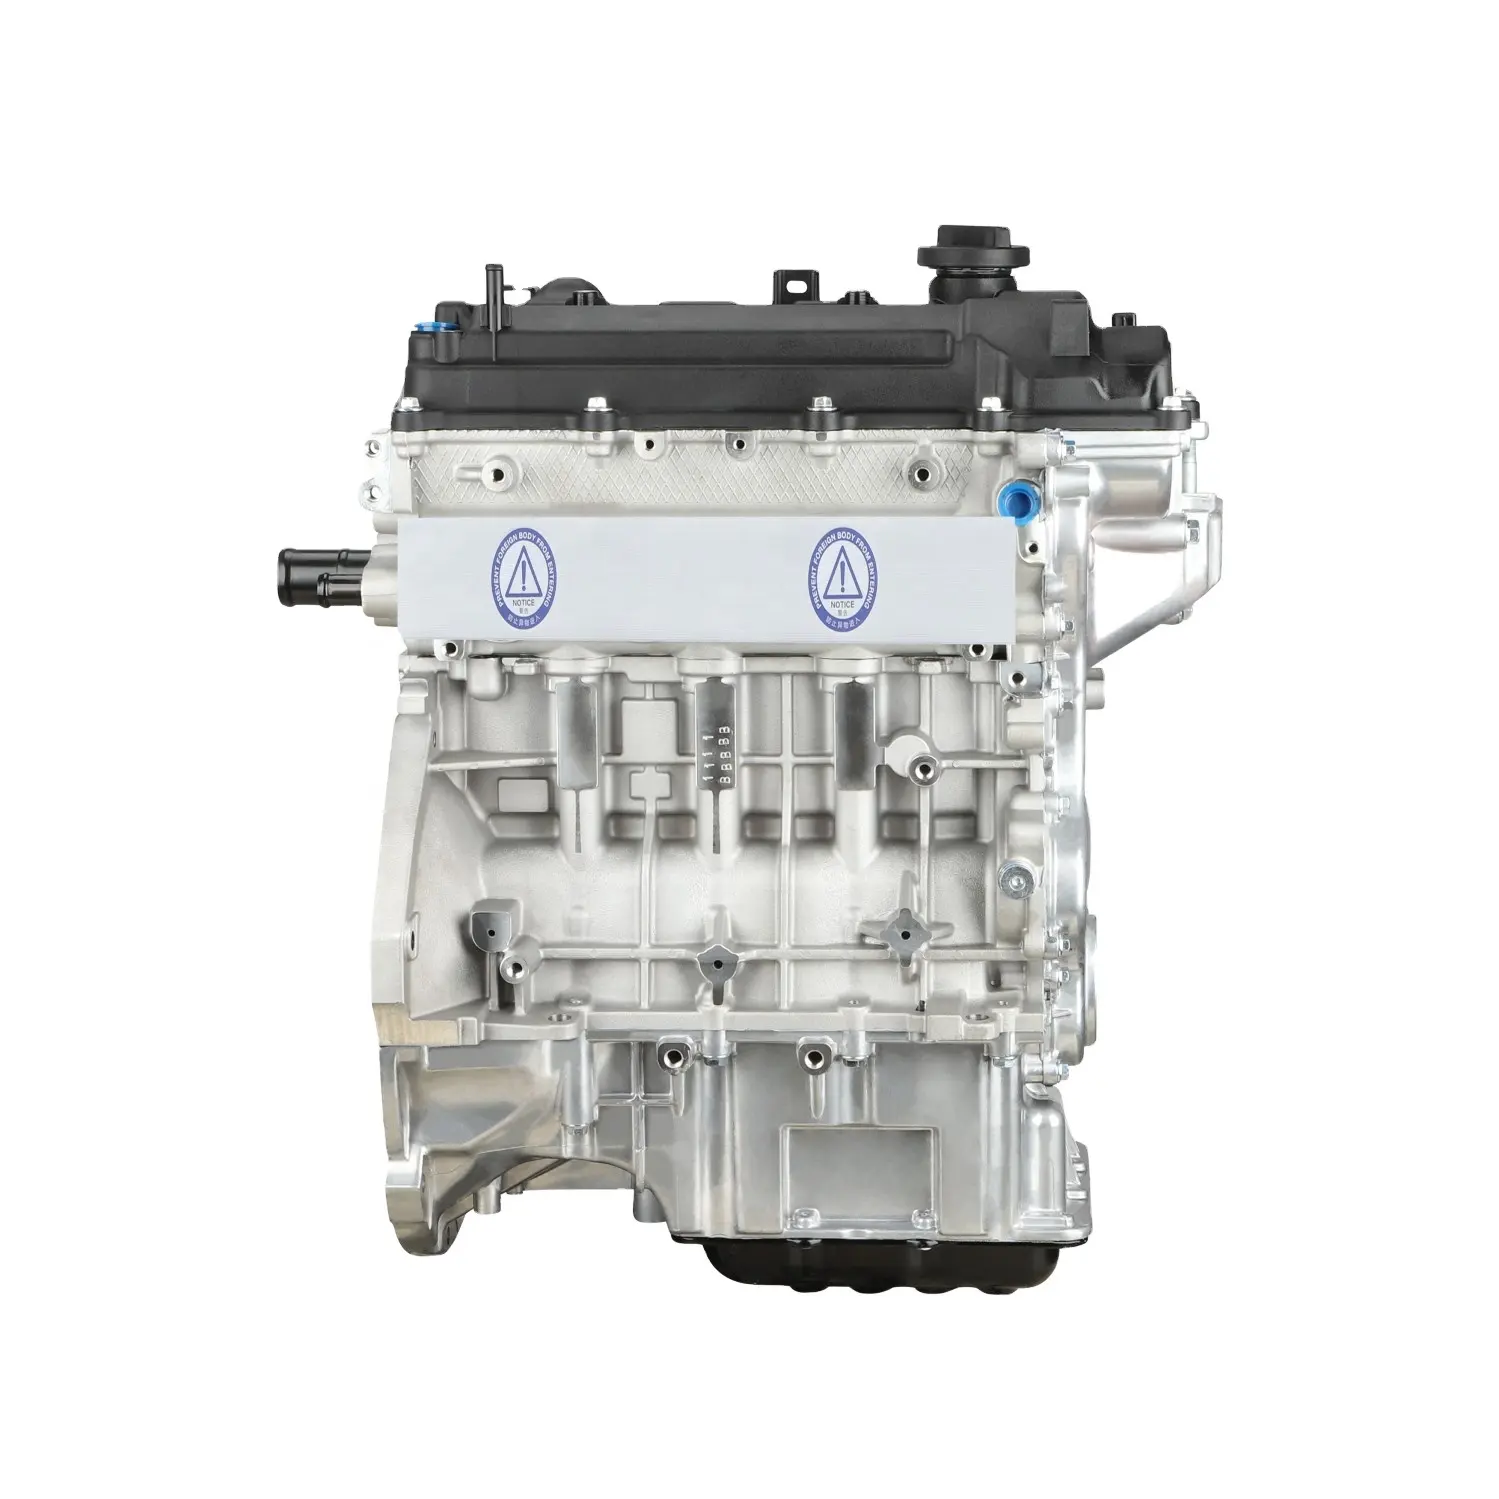 G4LC High quality Korean auto engine systems G4LC car engine assembly for KIA k2 pegas engine